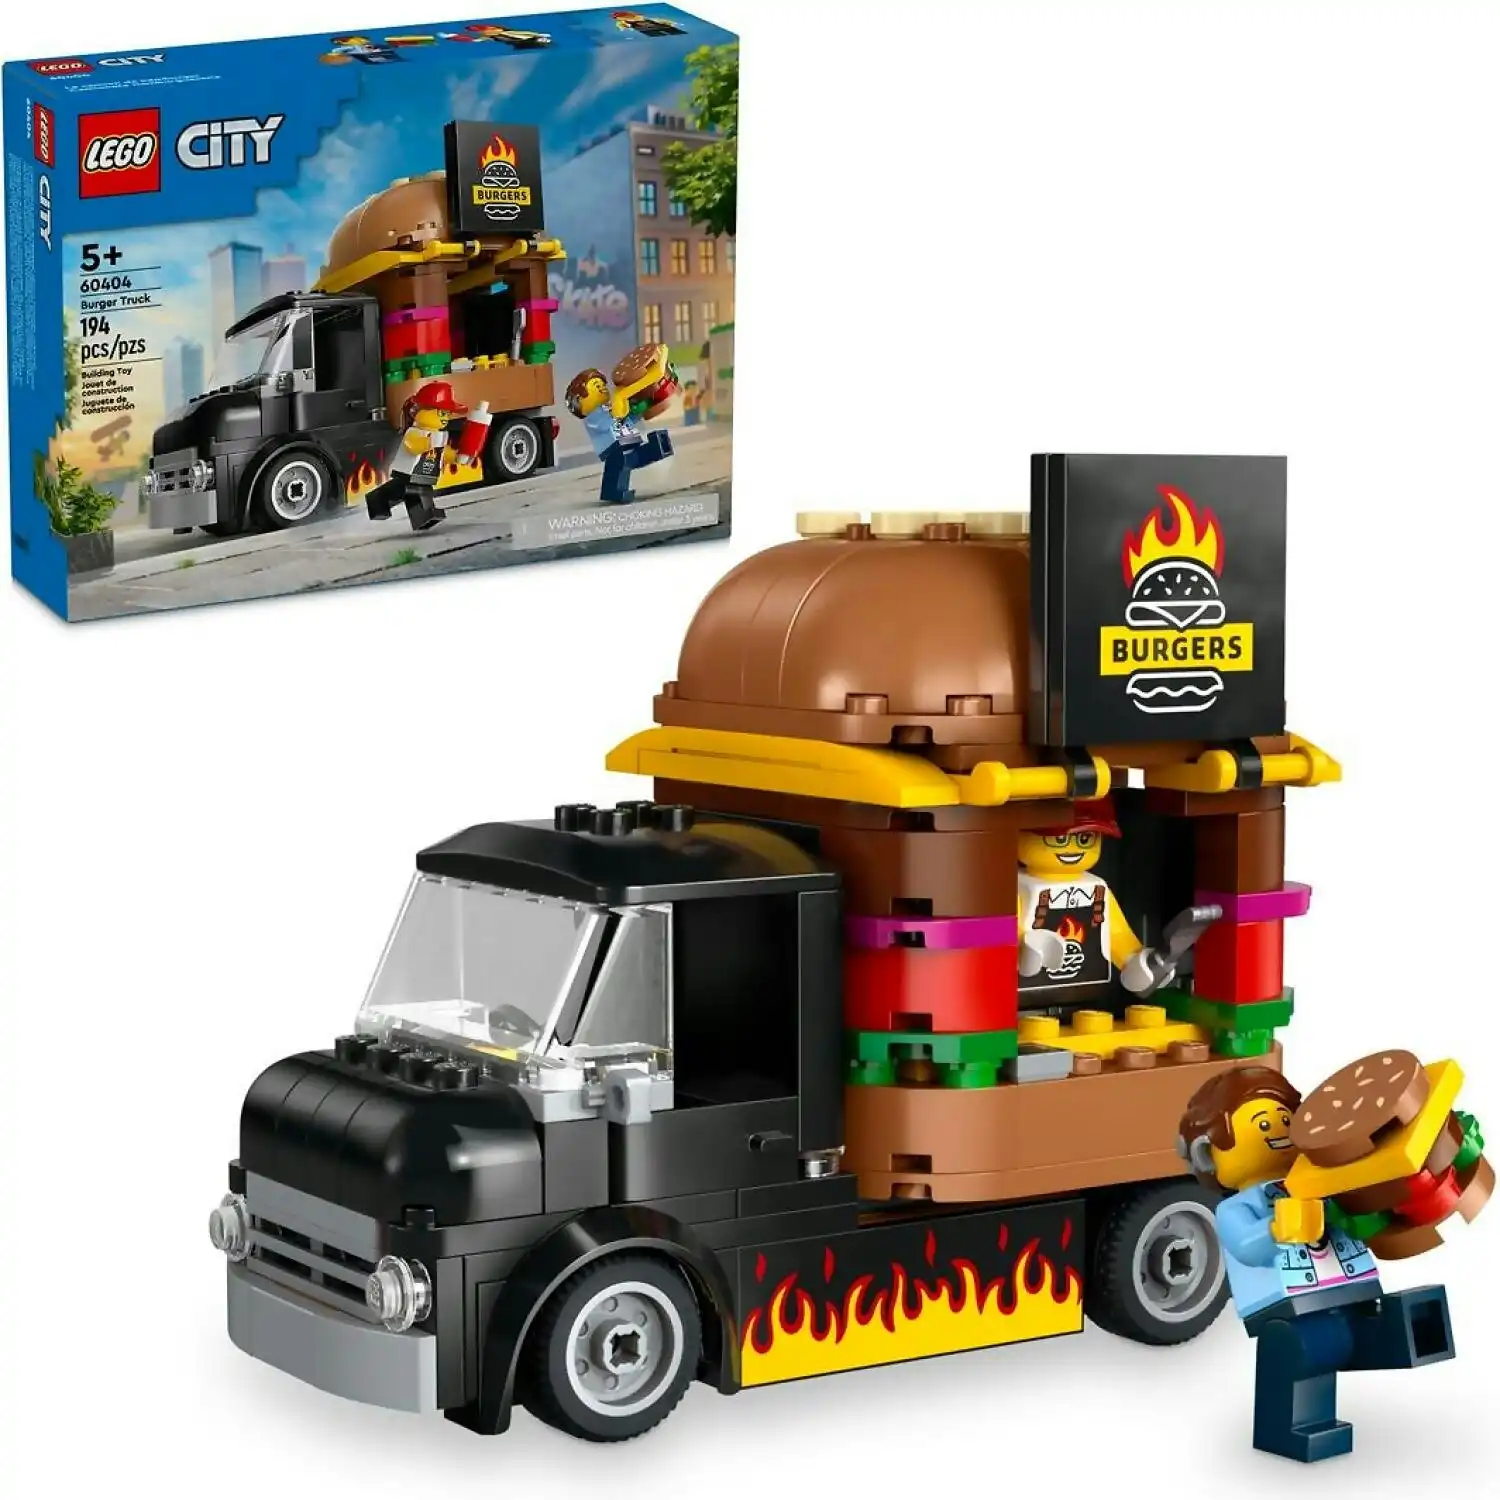 LEGO 60404 Burger Truck - City